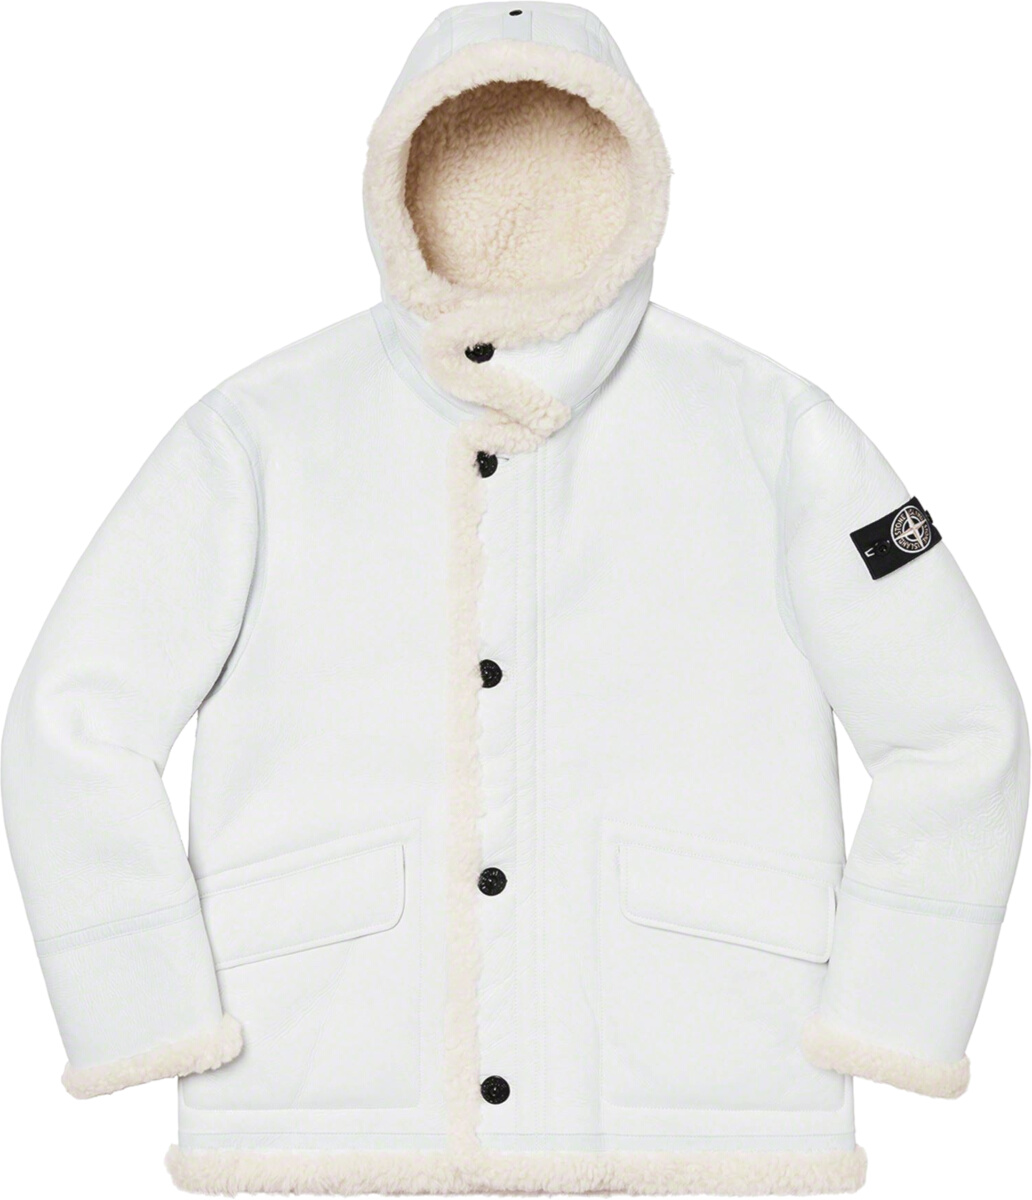 Stone Island x Supreme White Sheepskin & Shearling Jacket | Incorporated  Style